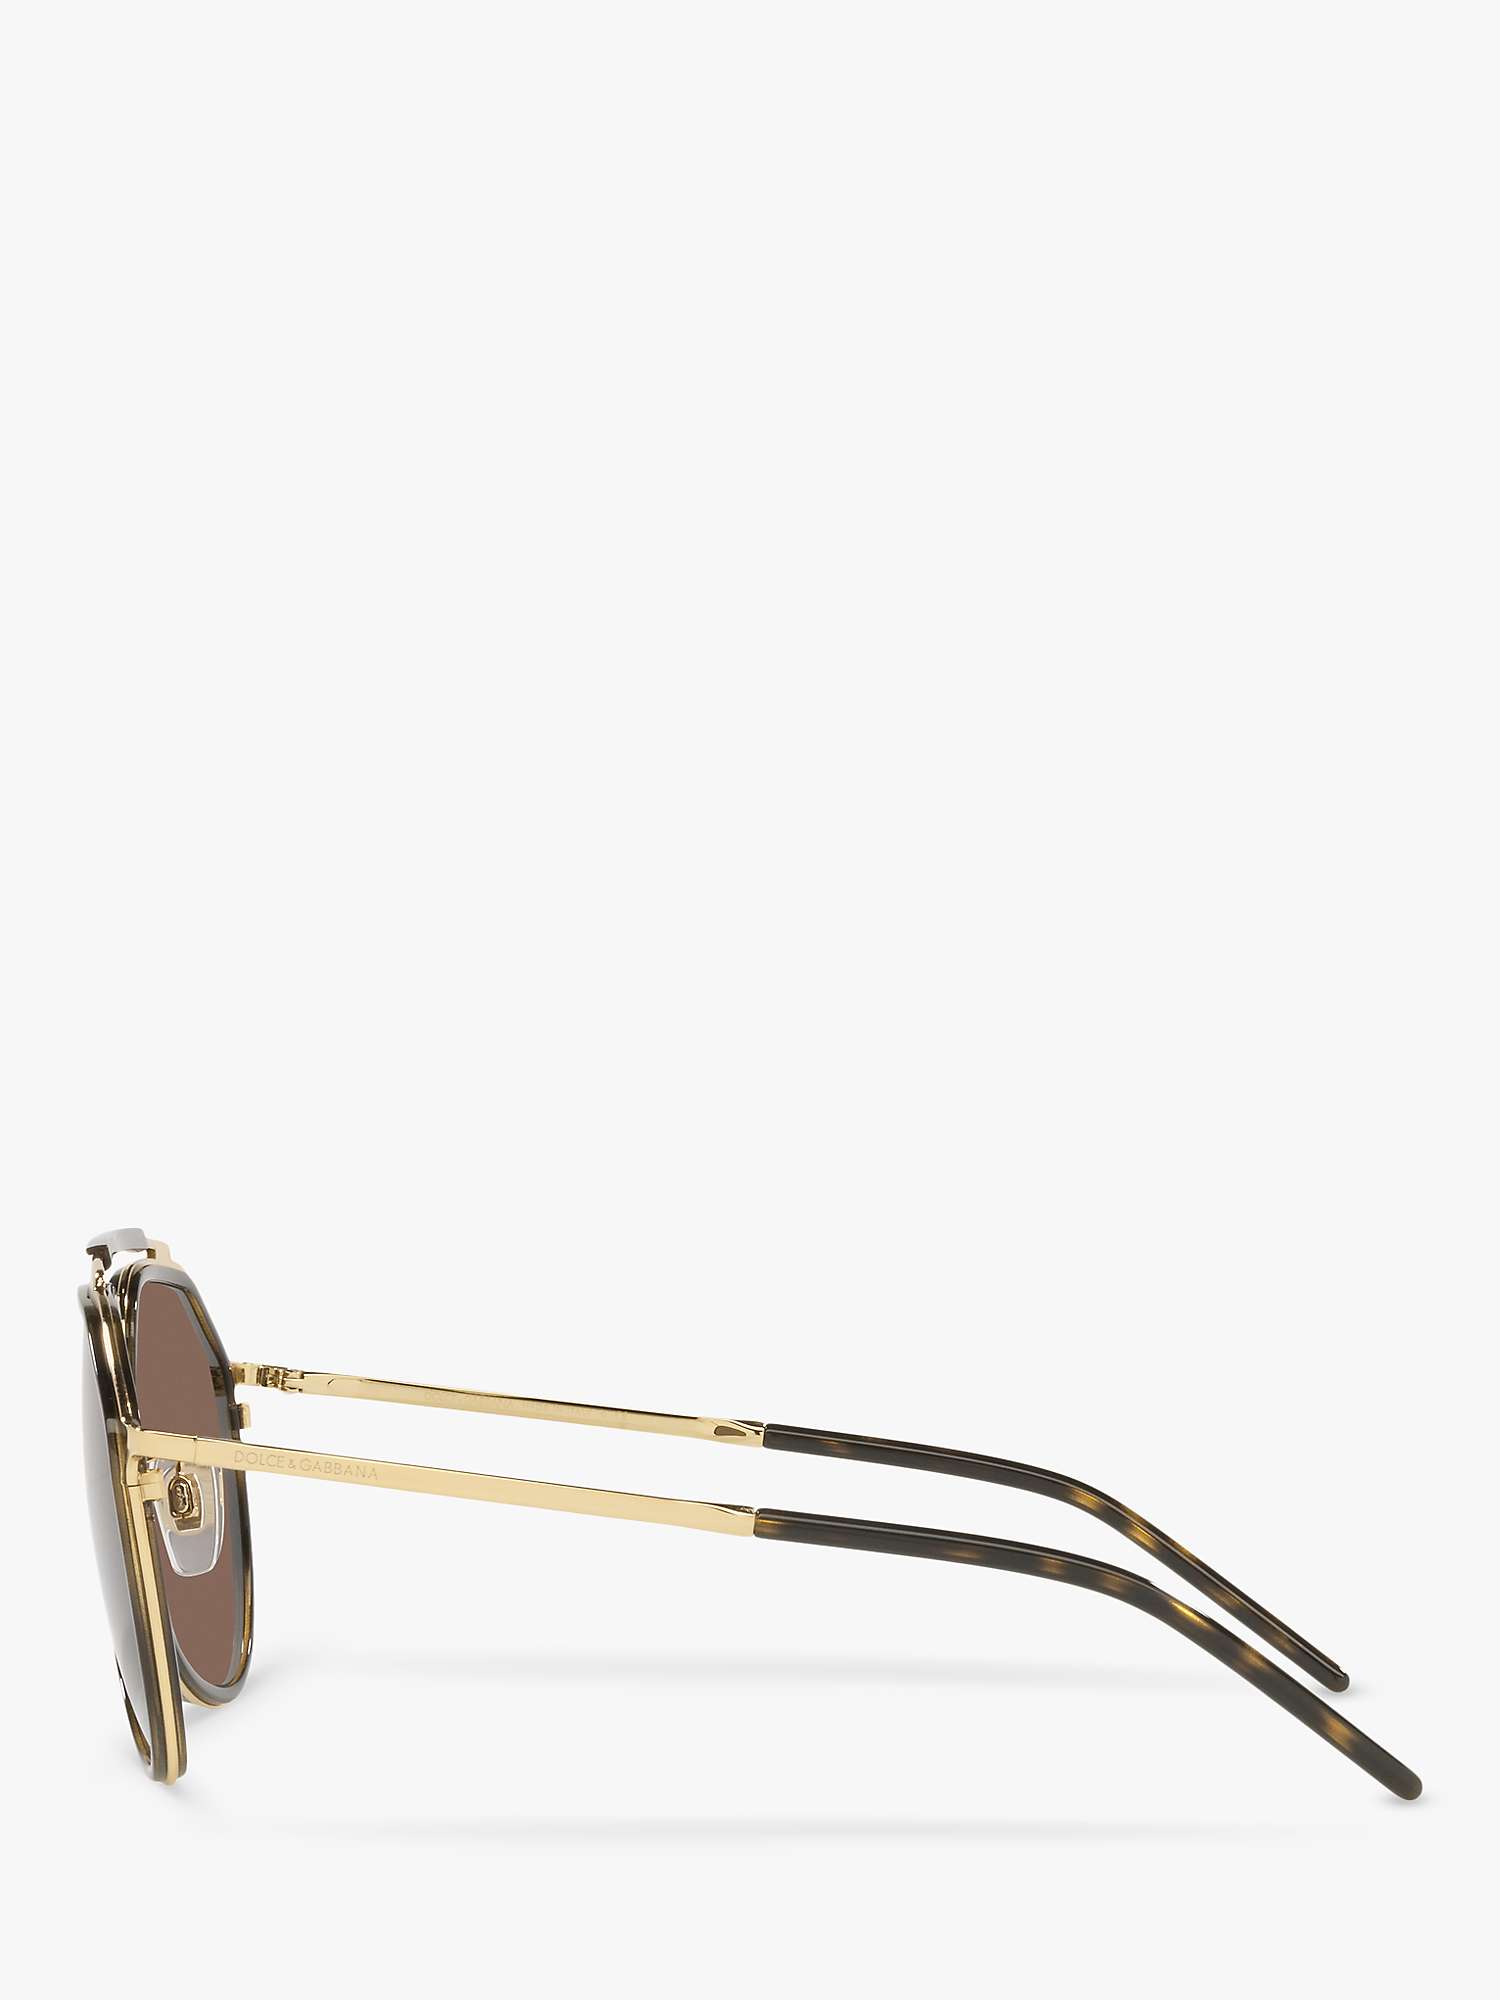 Buy Dolce & Gabbana DG227702 Men's Aviator Sunglasses, Gold/Havana Online at johnlewis.com